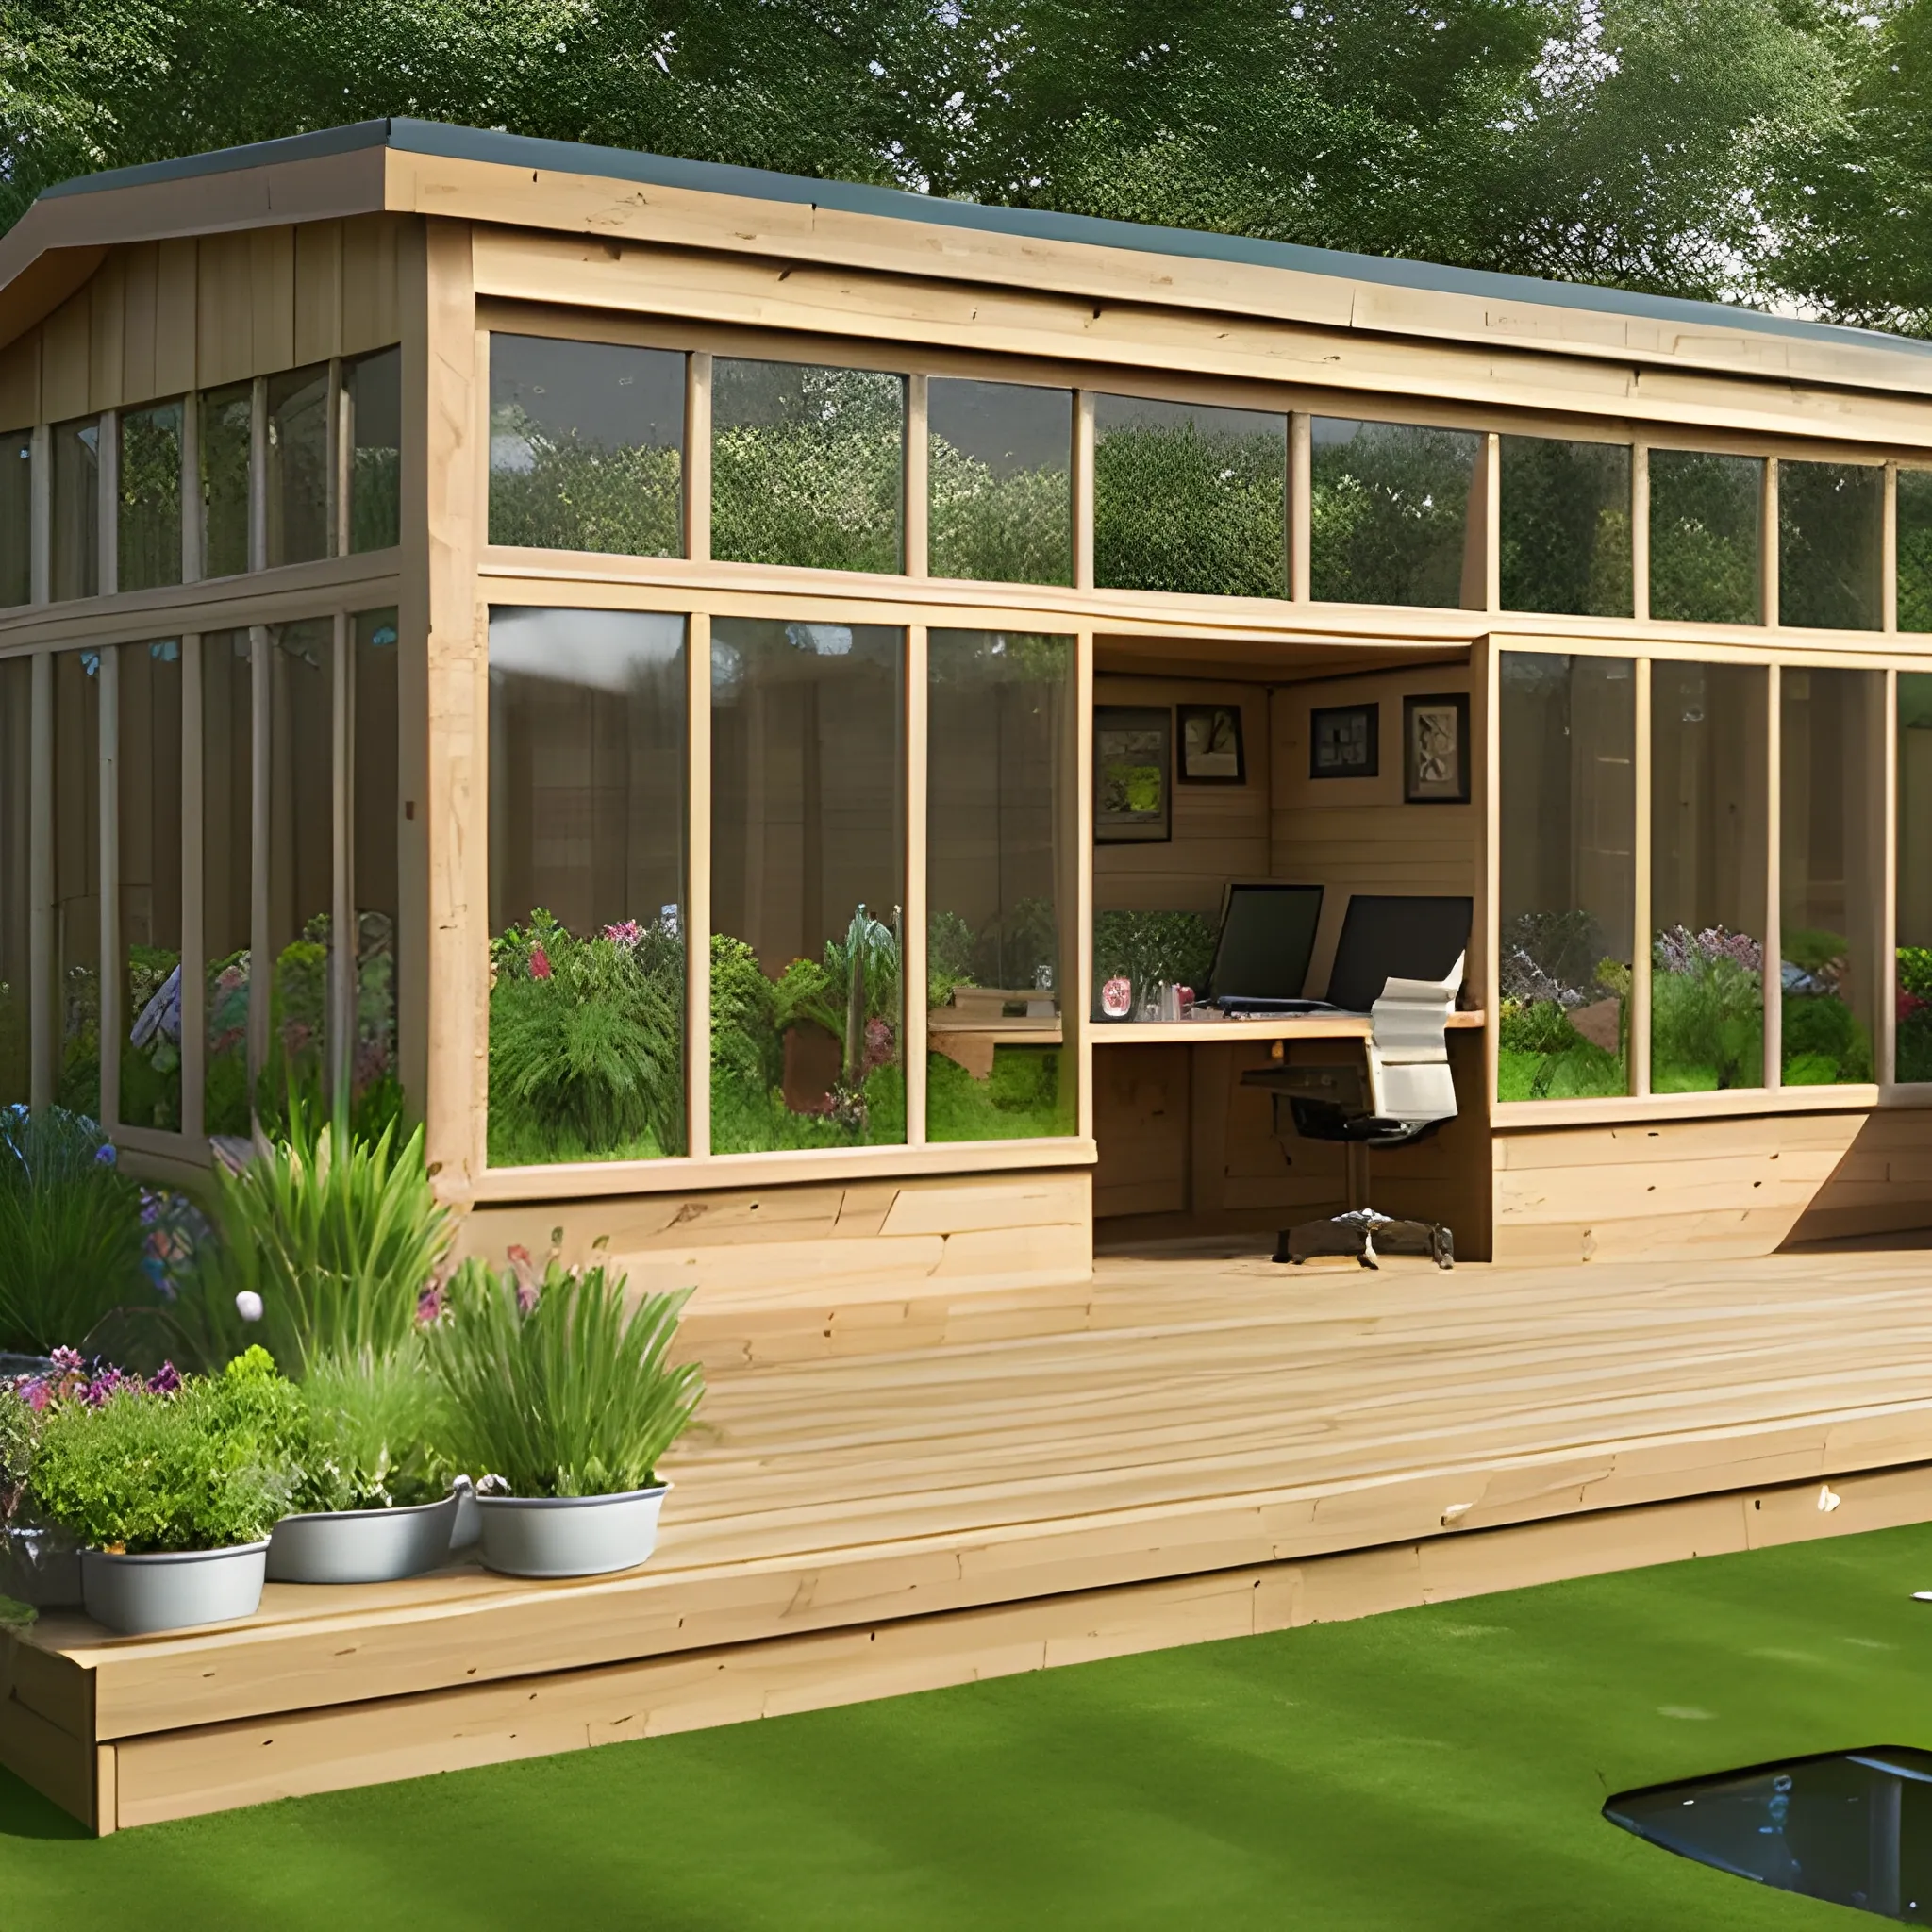 garden room, wood cladding, large bi-folding doors, decking, large pond, office desk and seating area, plants, flowers, sunshine, 3D